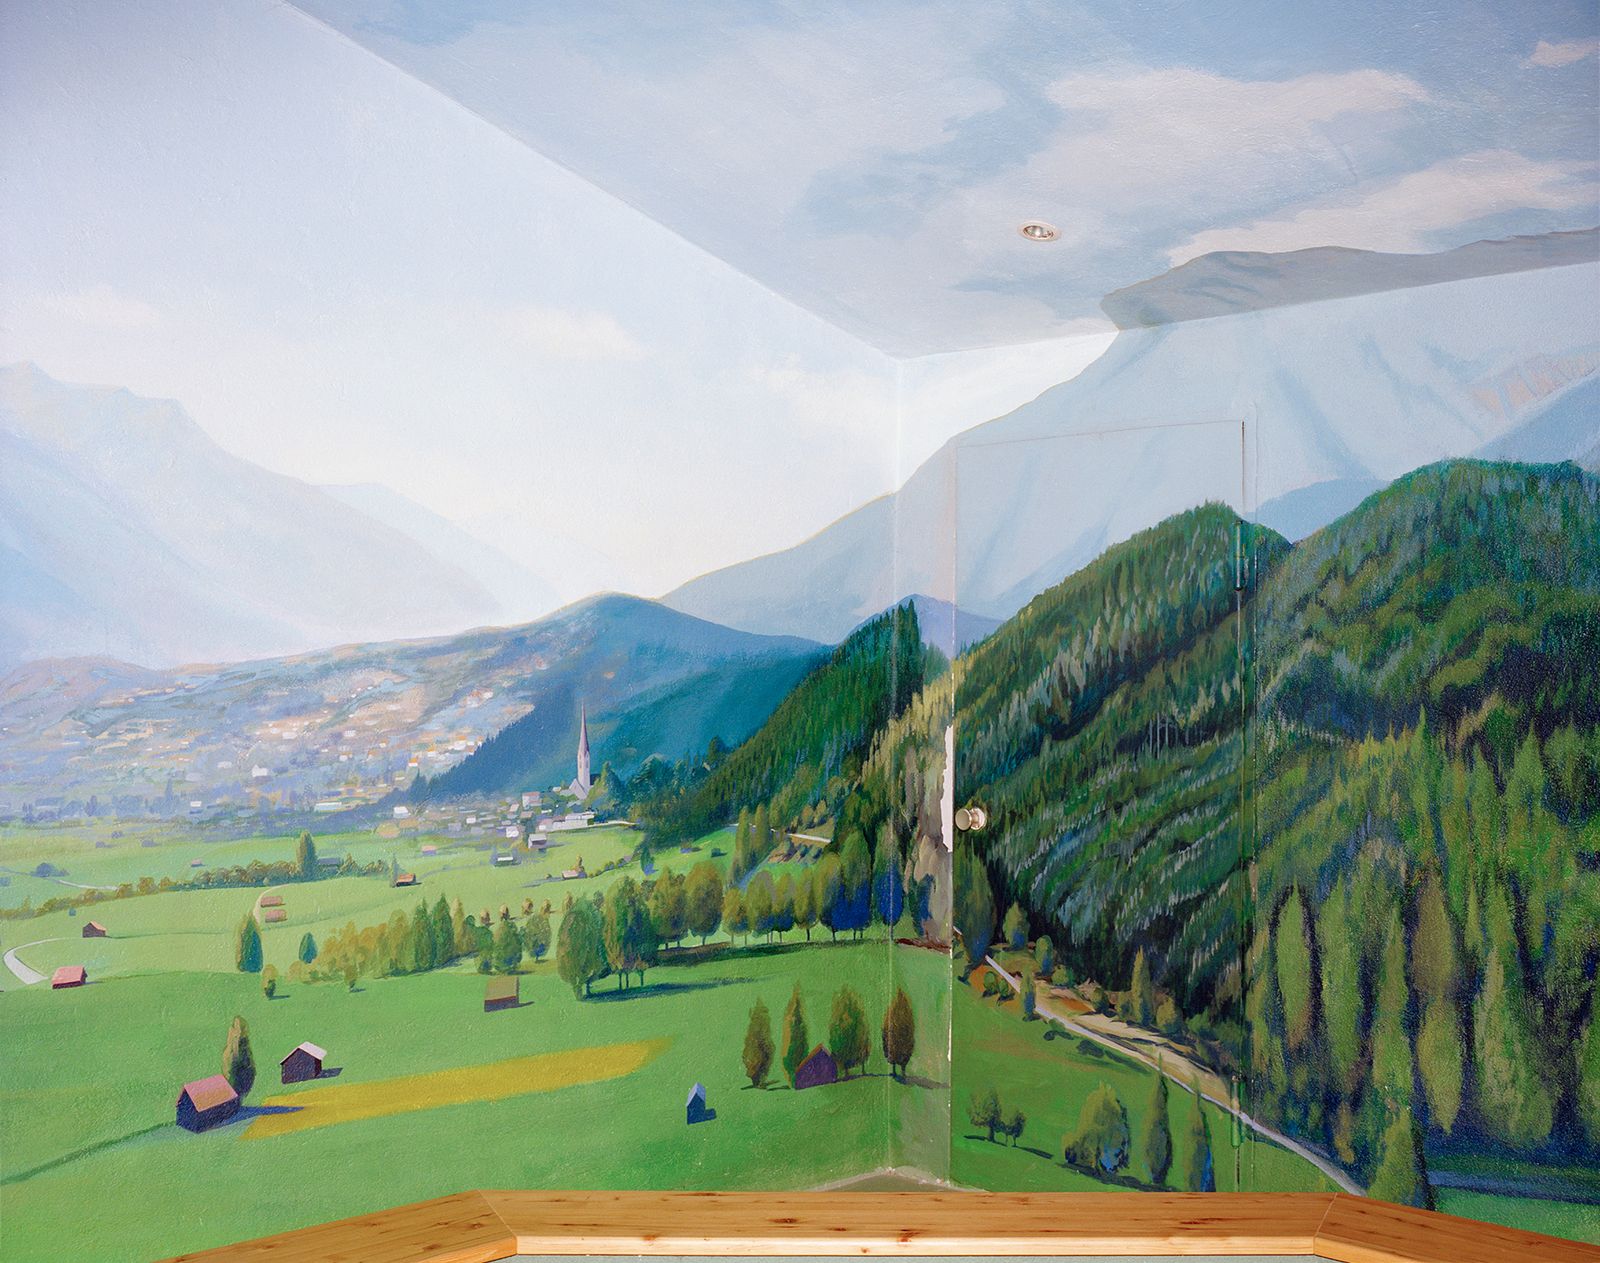 © Nicolò Panzeri & Mattia Micheli - Alpine landscape painted on a wall inside Starkenberger Brewery. Tarrenz, Austria, 2020.